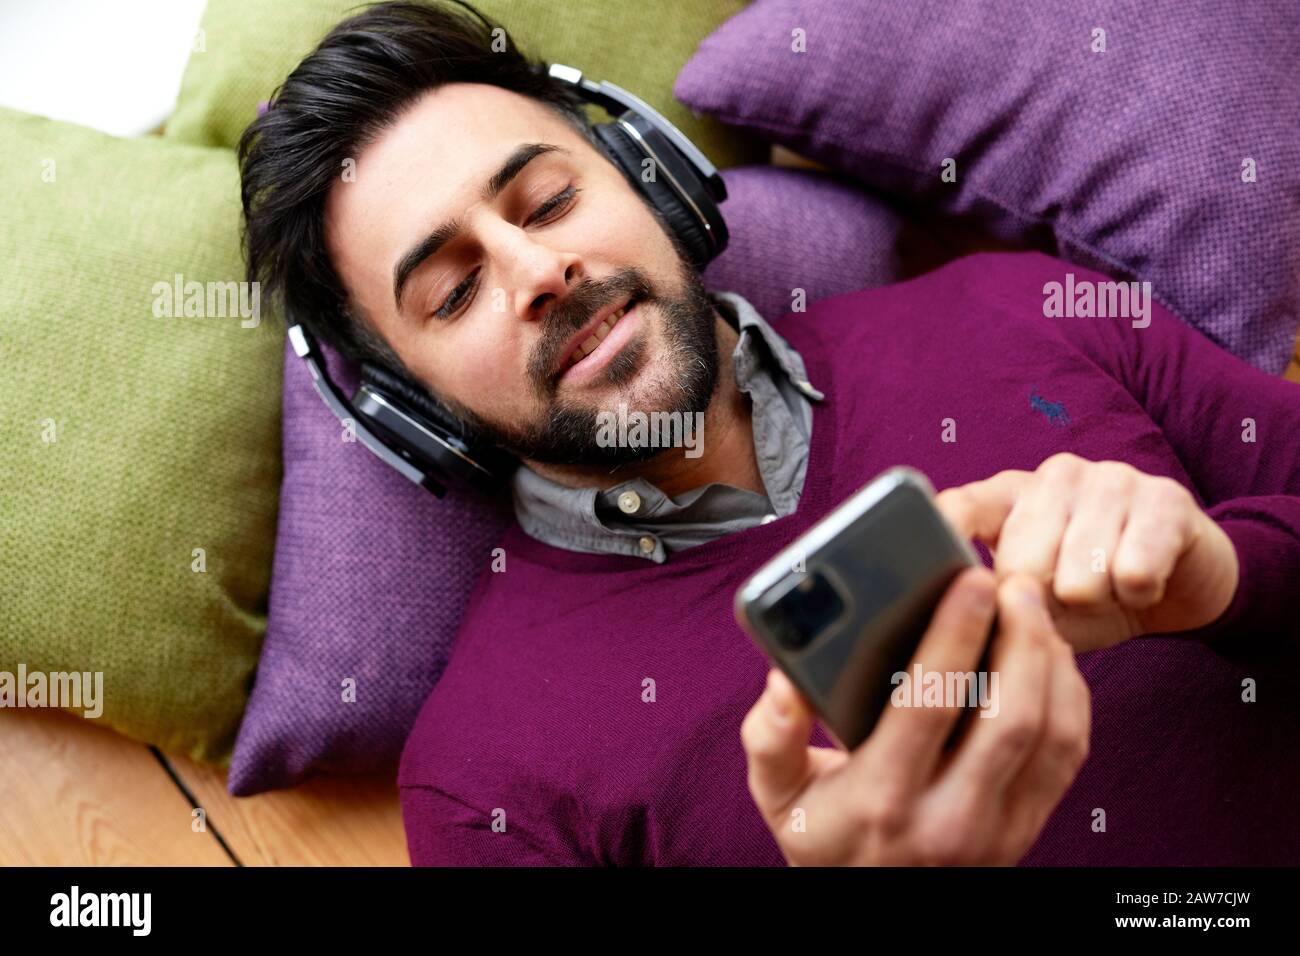 Man listing to music wearing headphones Stock Photo